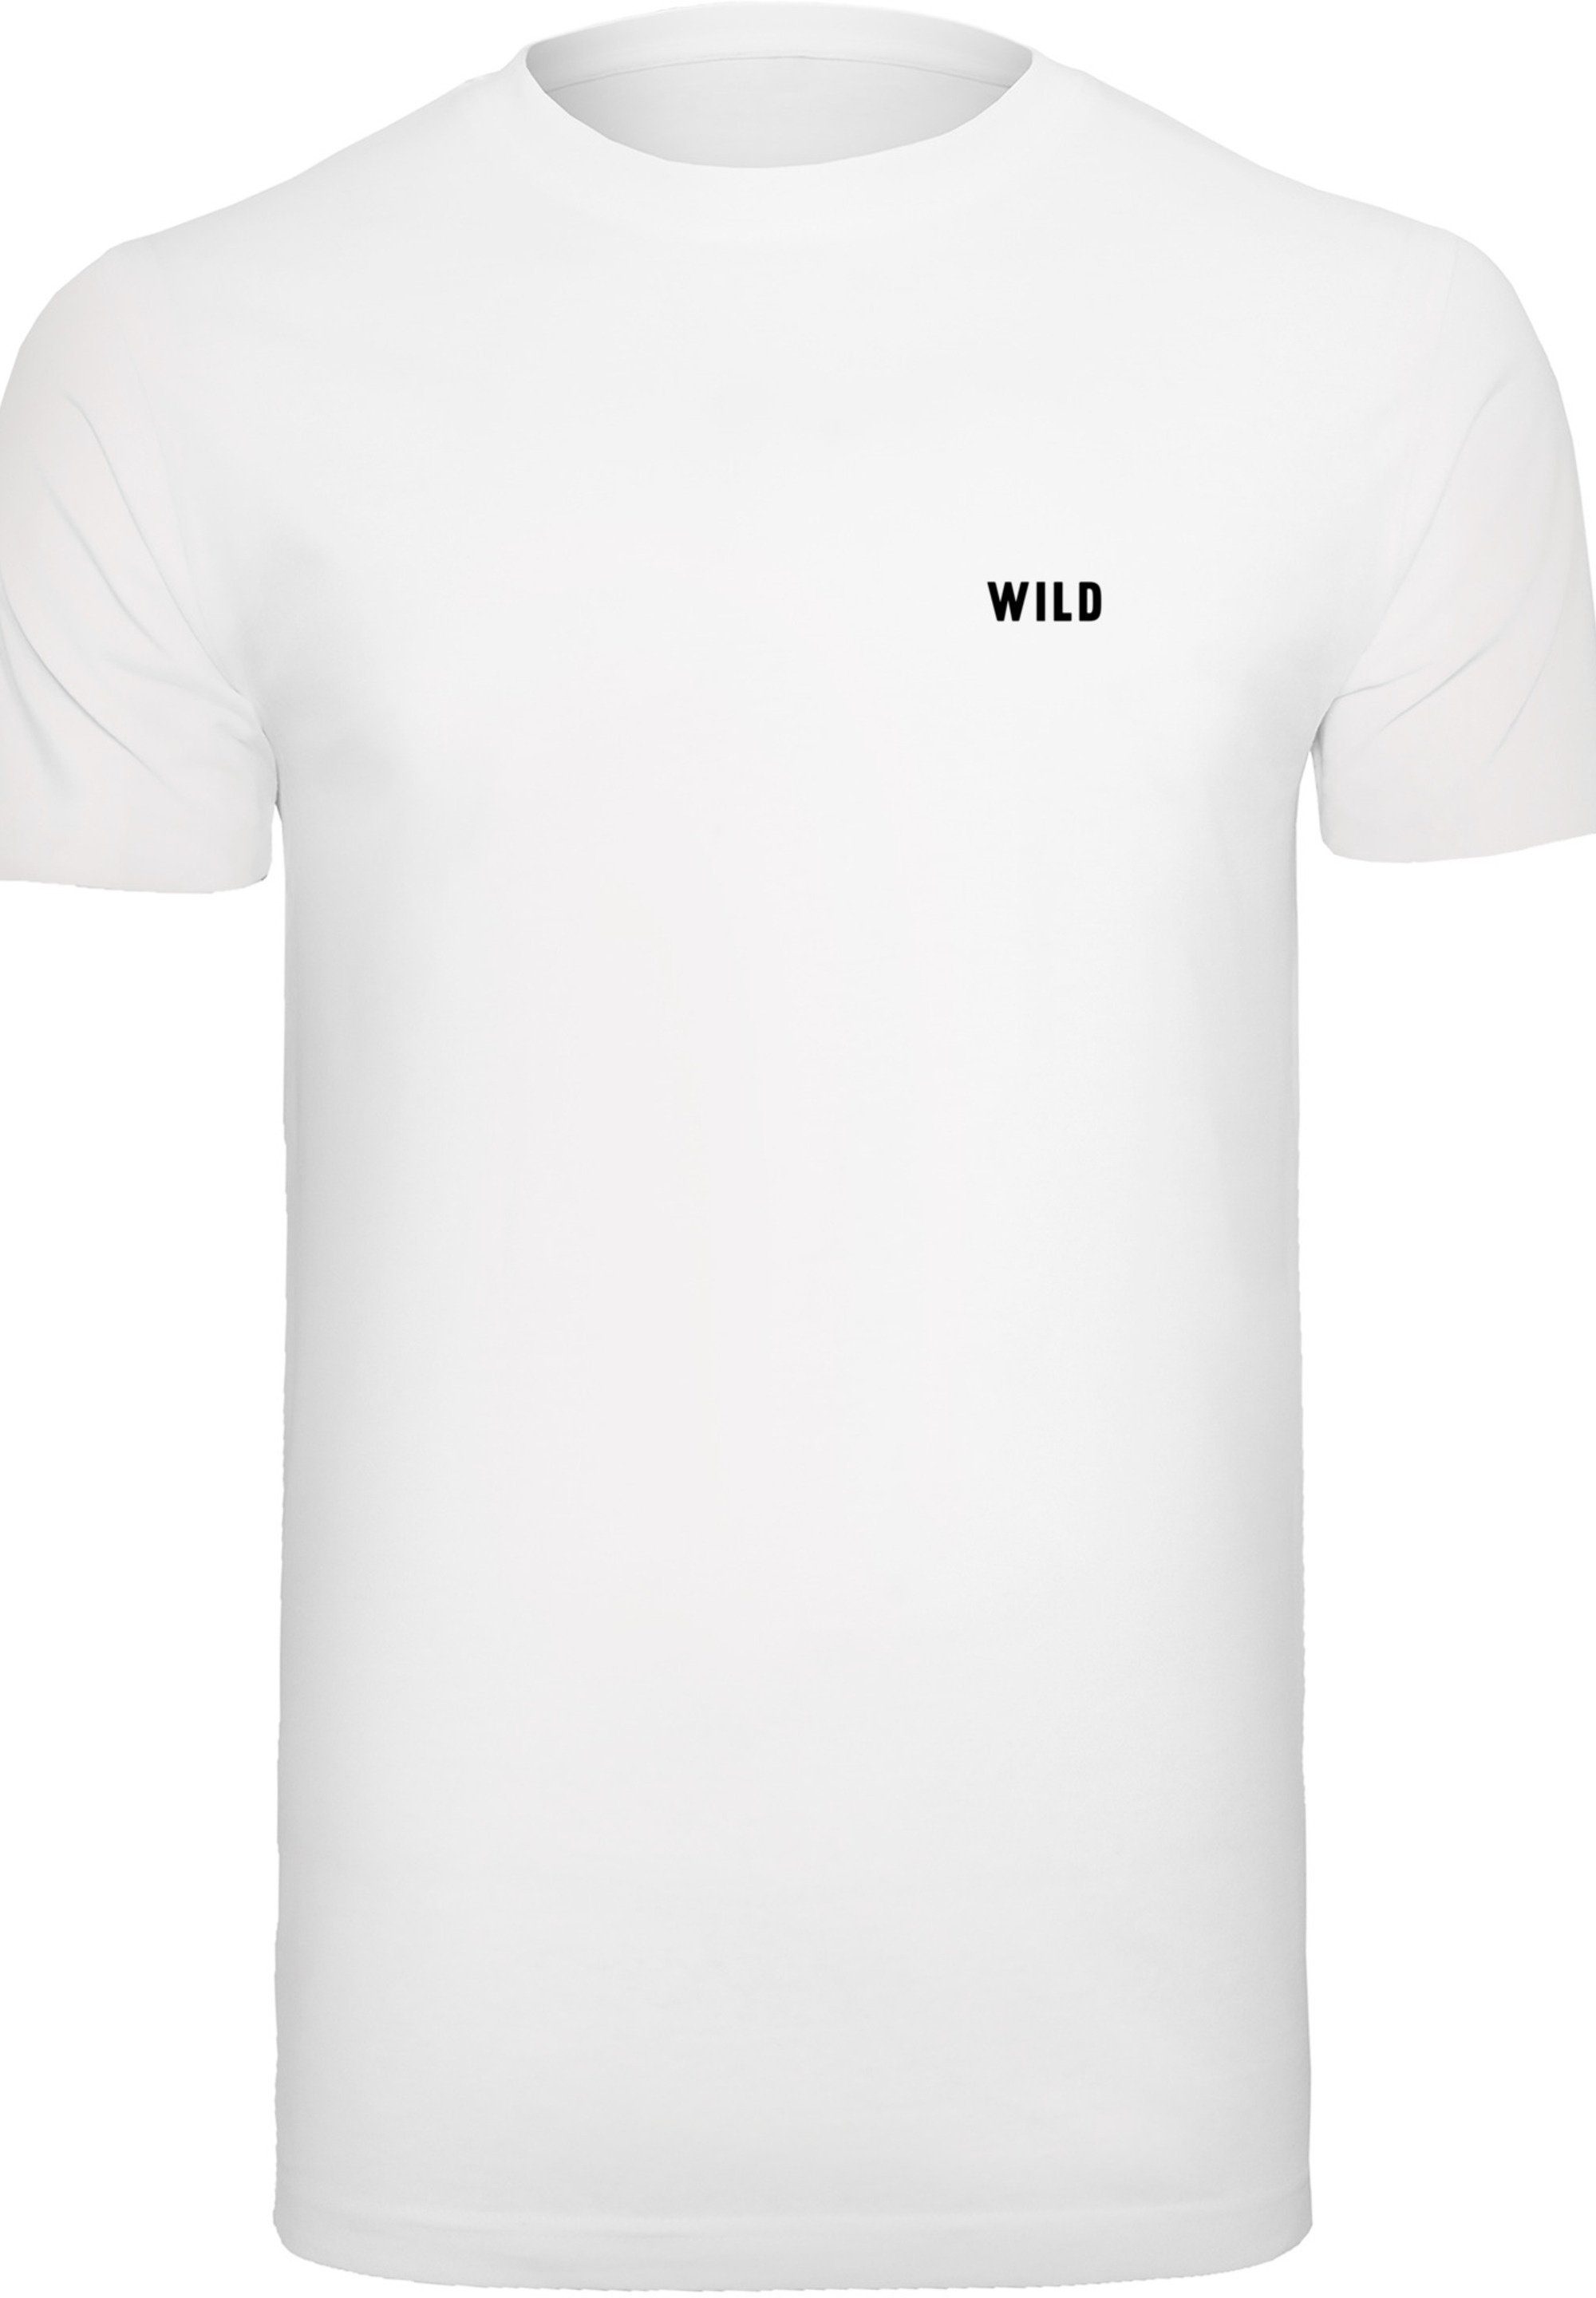 F4NT4STIC 2022, Jugendwort weiß slang Wild T-Shirt